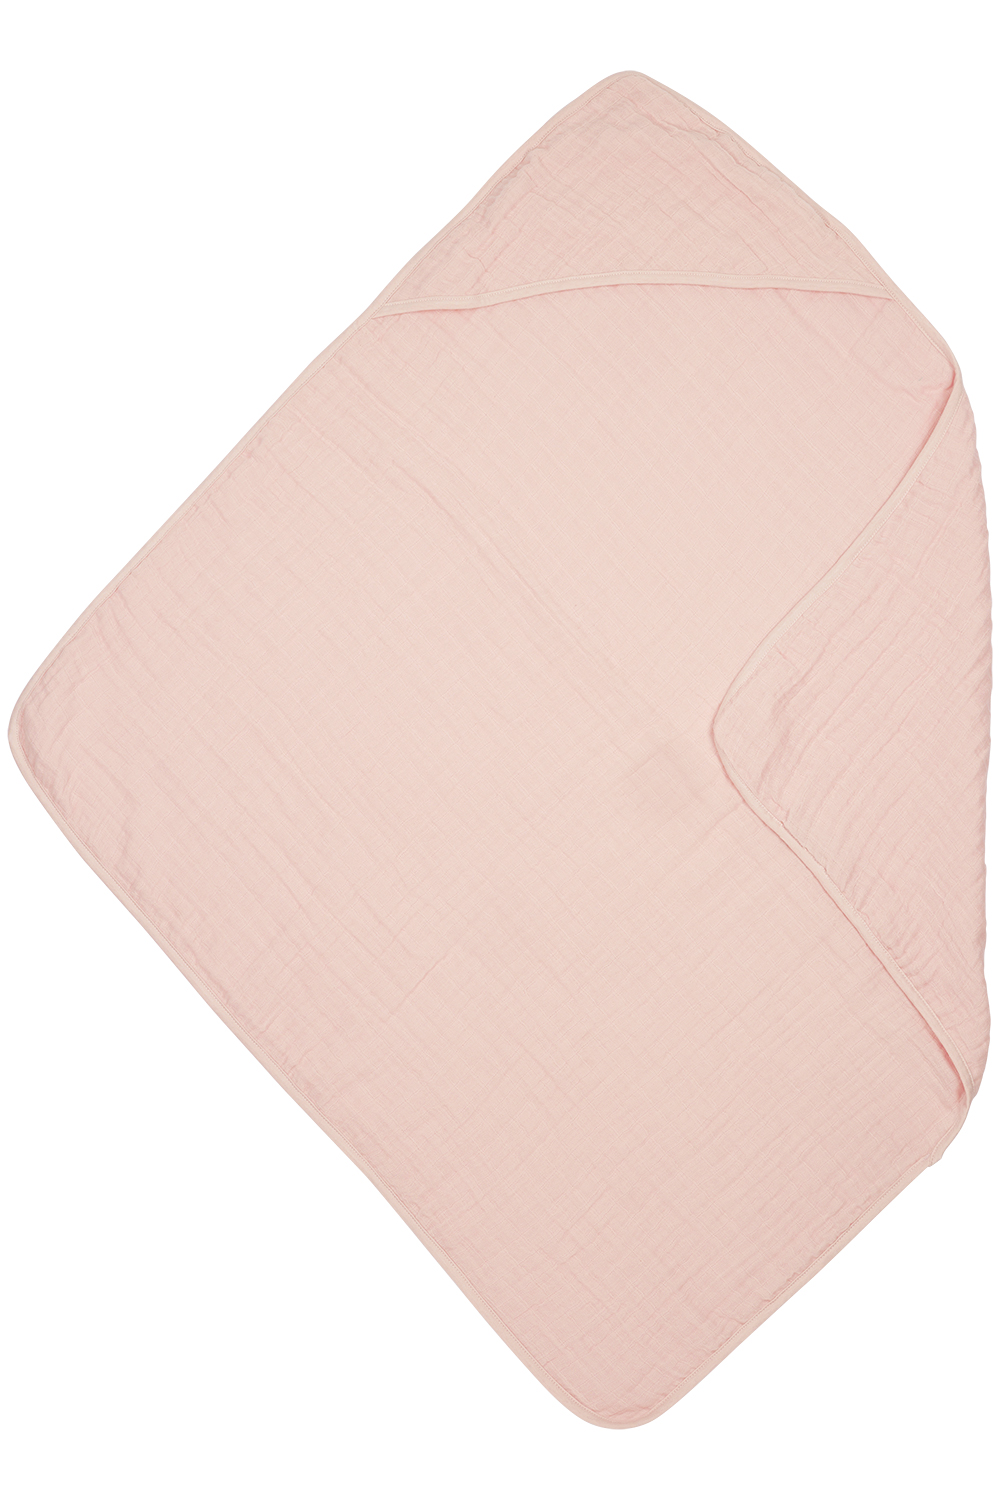 Bathcape pre-washed muslin Uni - soft pink - 80x80cm